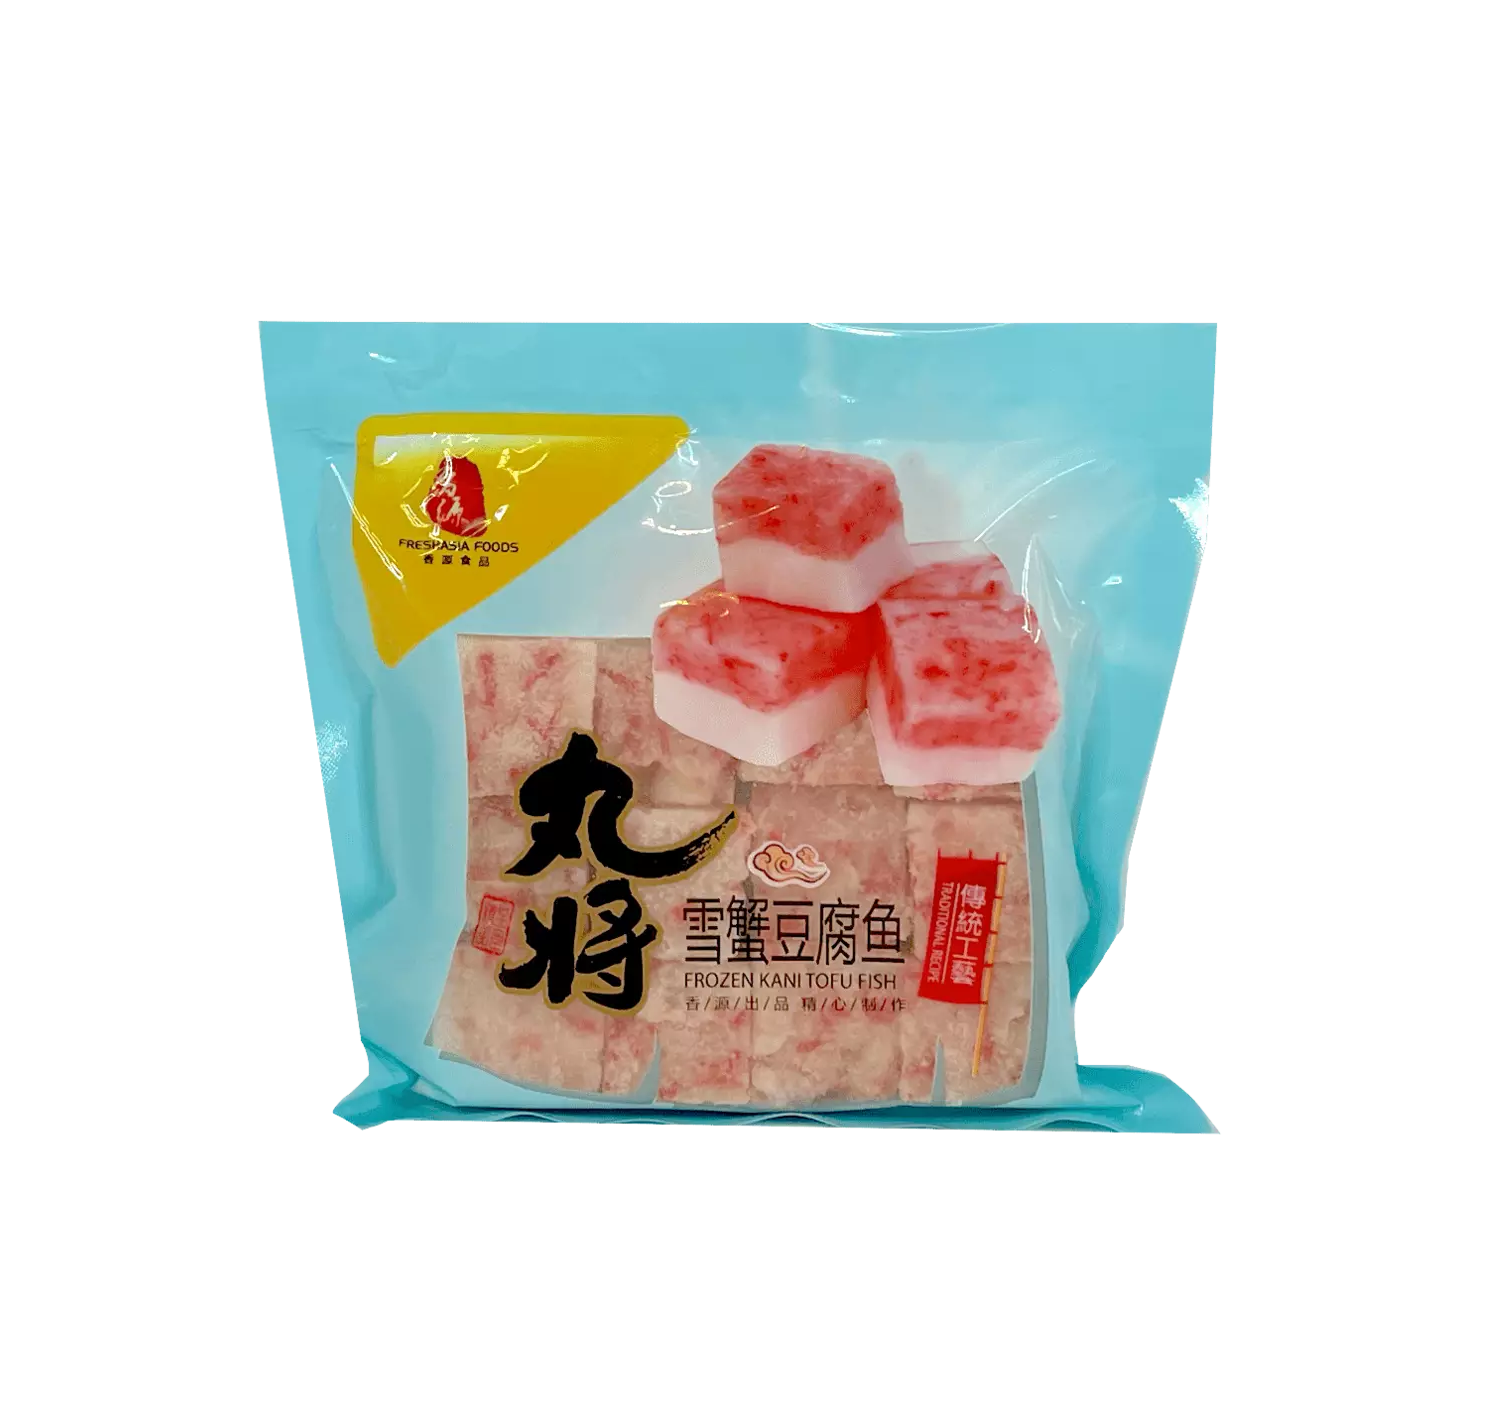 Snowcrab Imitation / Tofu Fish Frozen 200g WJ Freshasia China